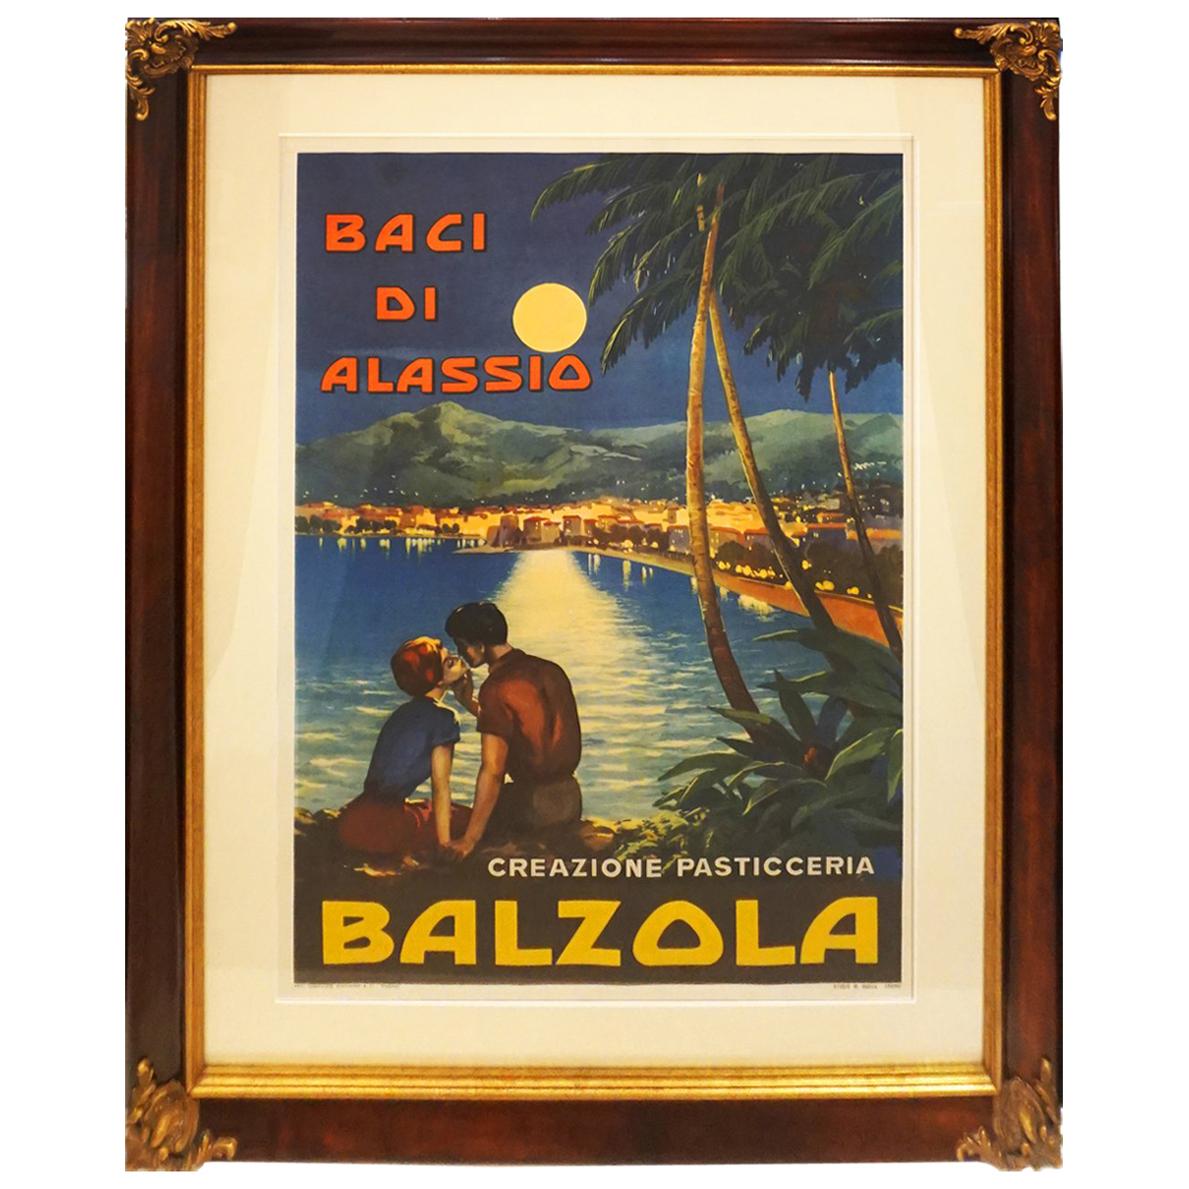 Italian Vintage Pastry Shop Poster for ‘Balzola Baci Di Alassio�’, 1955 For Sale